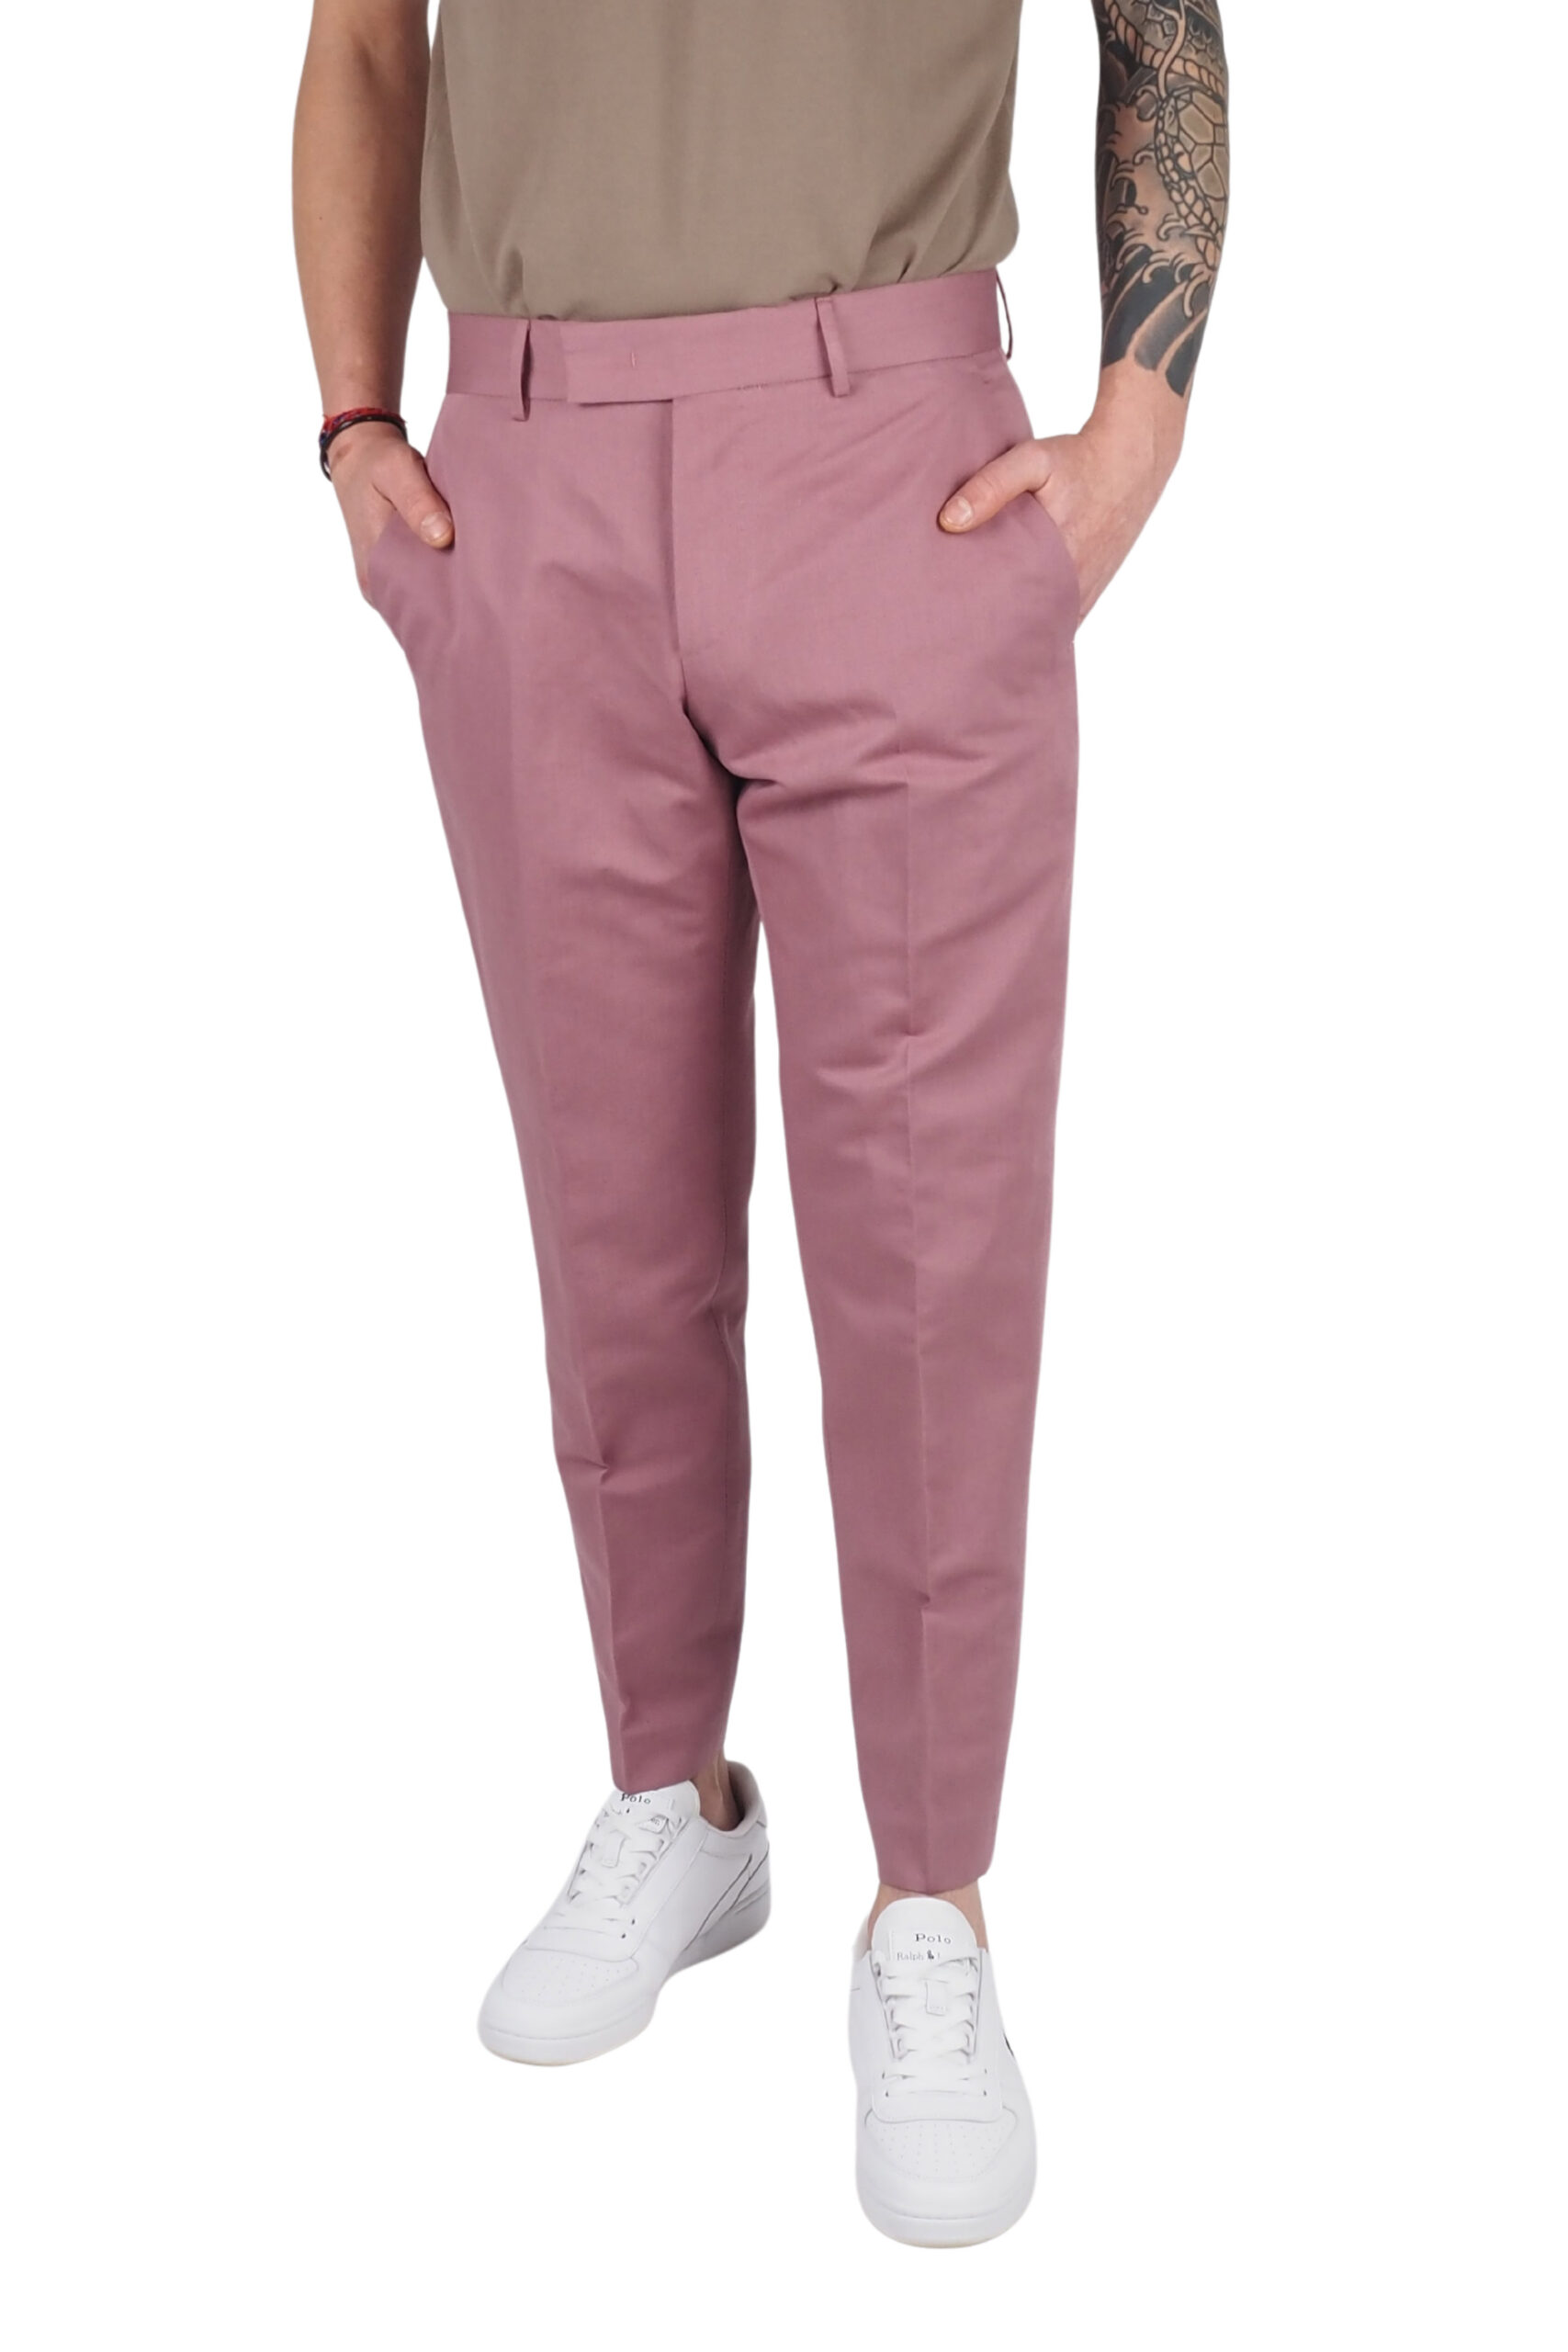 PT-Torino-pantalone-rosa-uomo